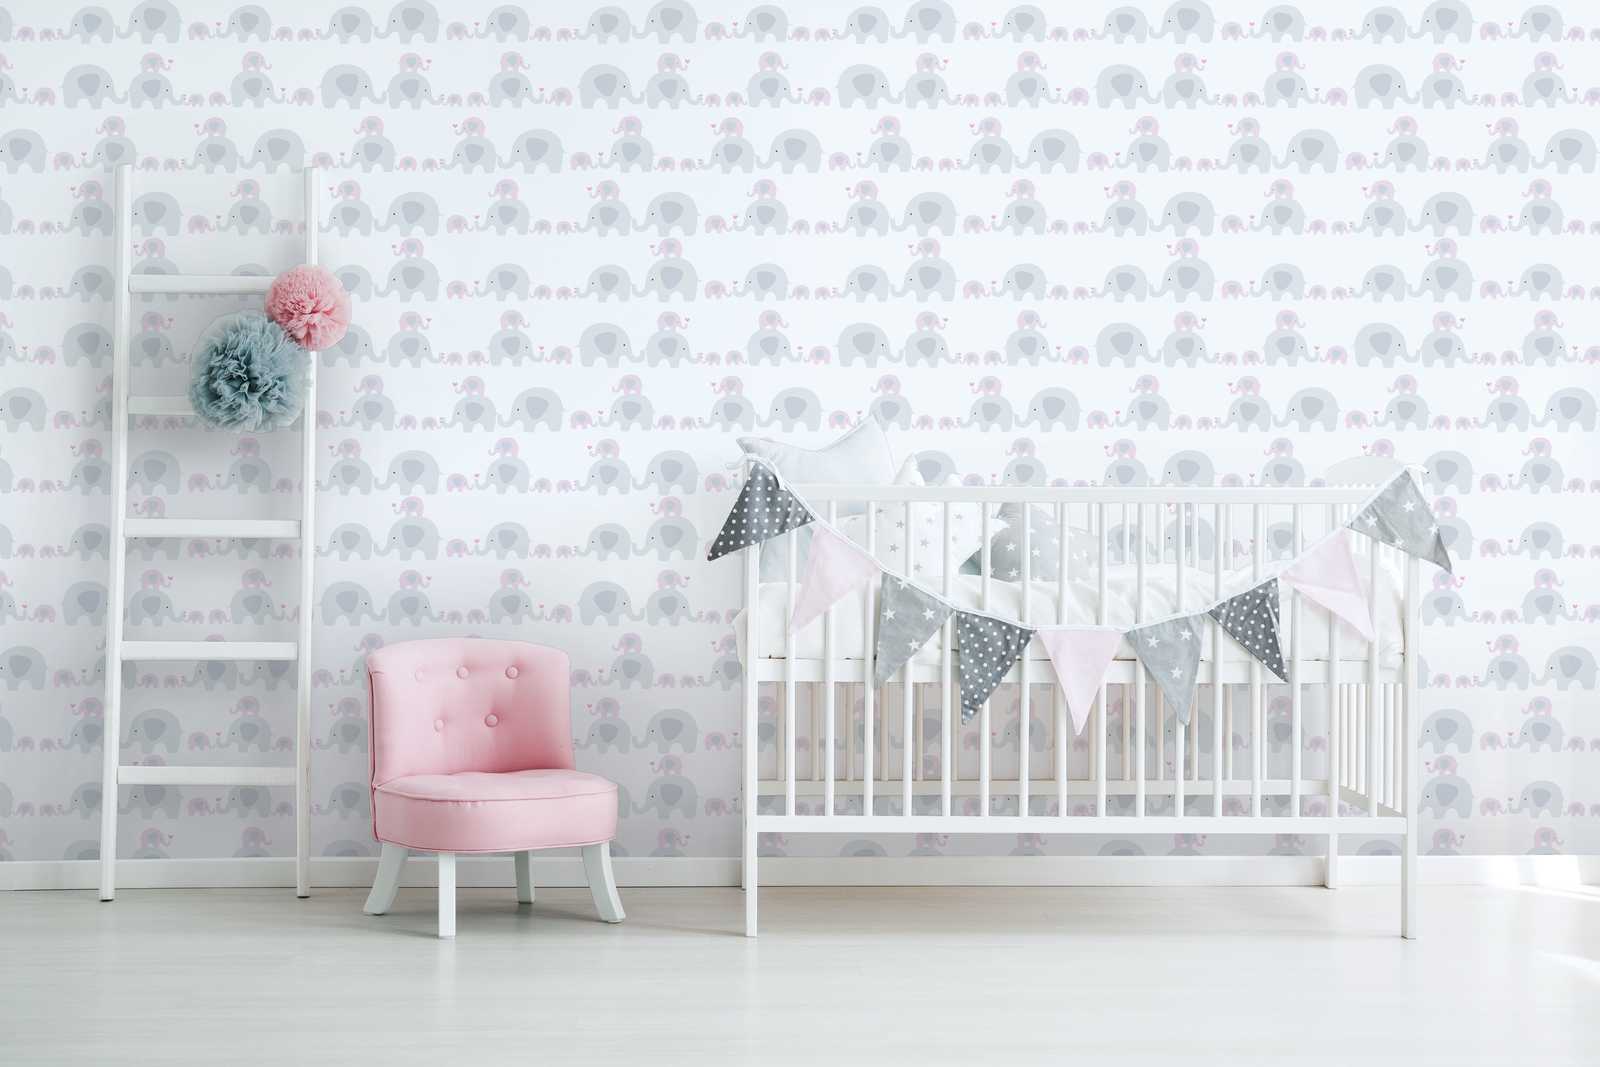             Wallpaper girls room elephant pattern - pink, grey , white
        